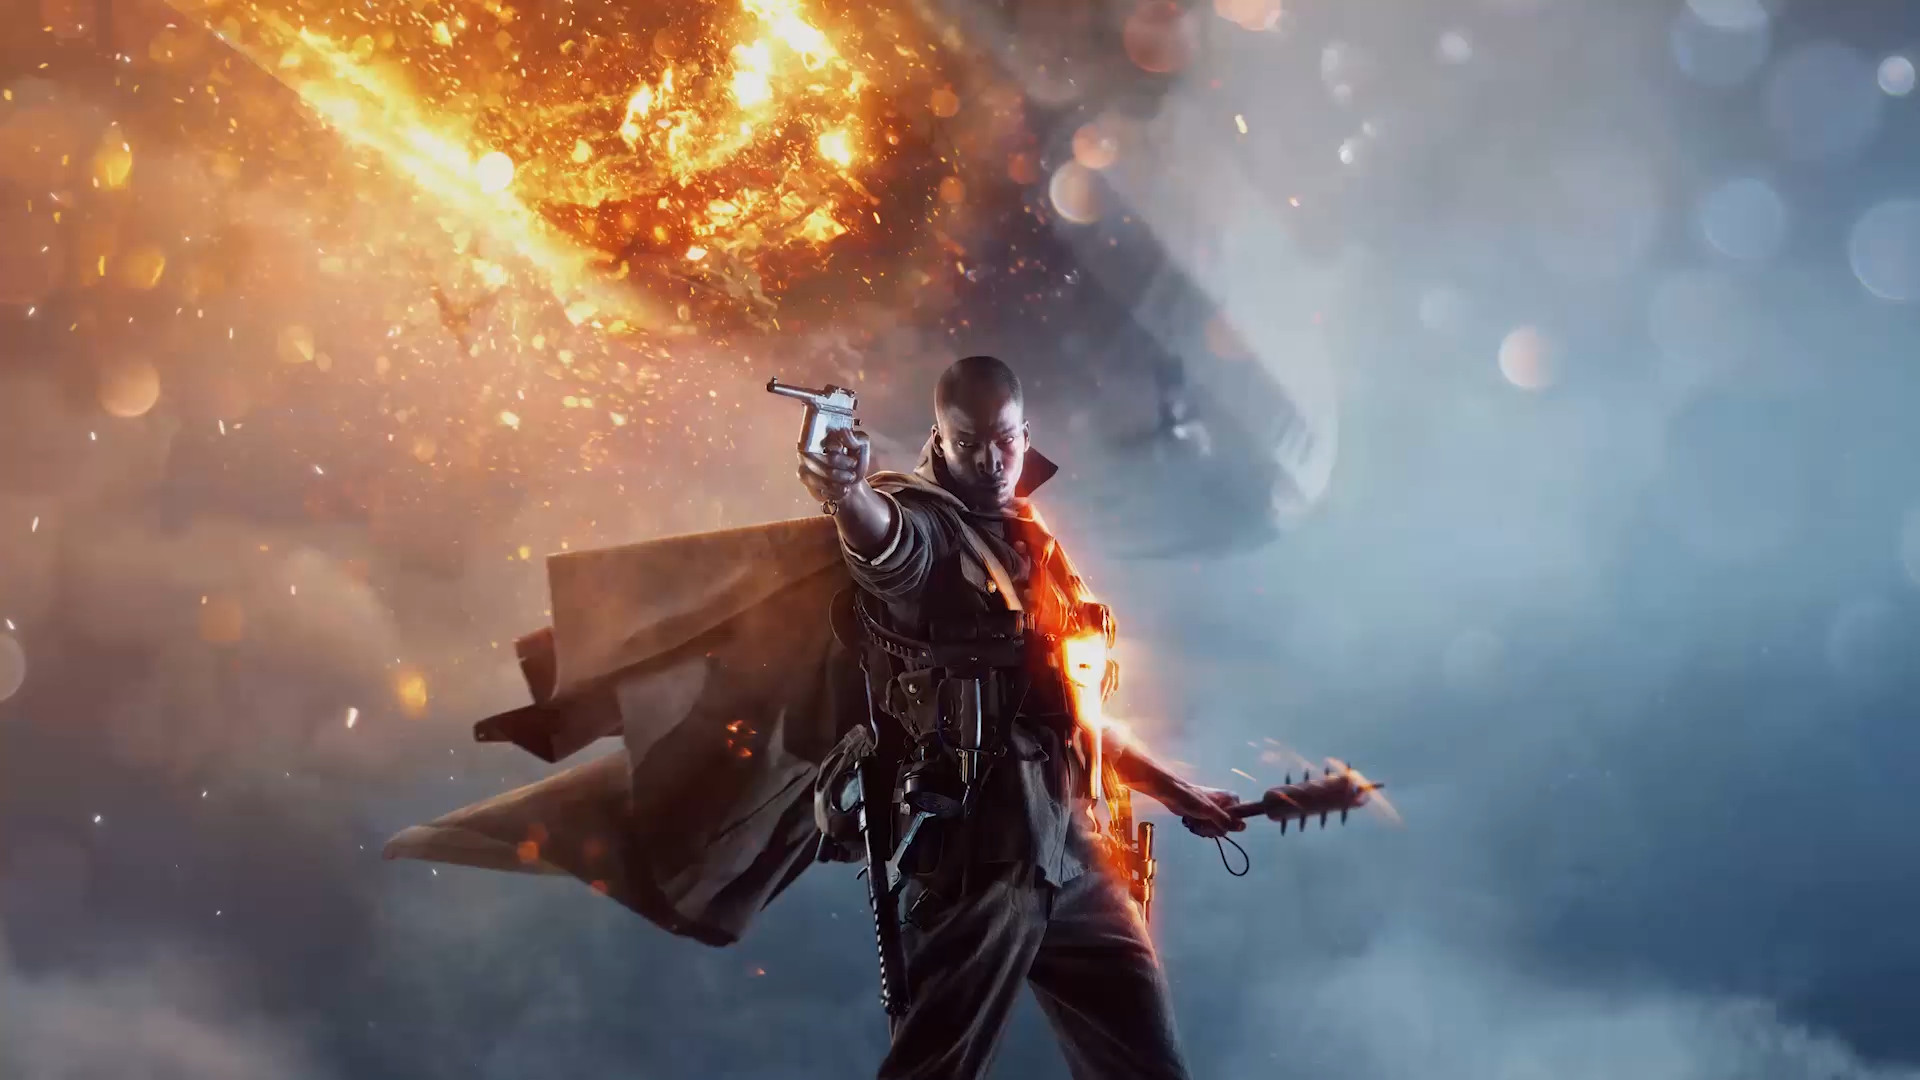 “Battlefield 1” Trailer Revealed - Set in World War I